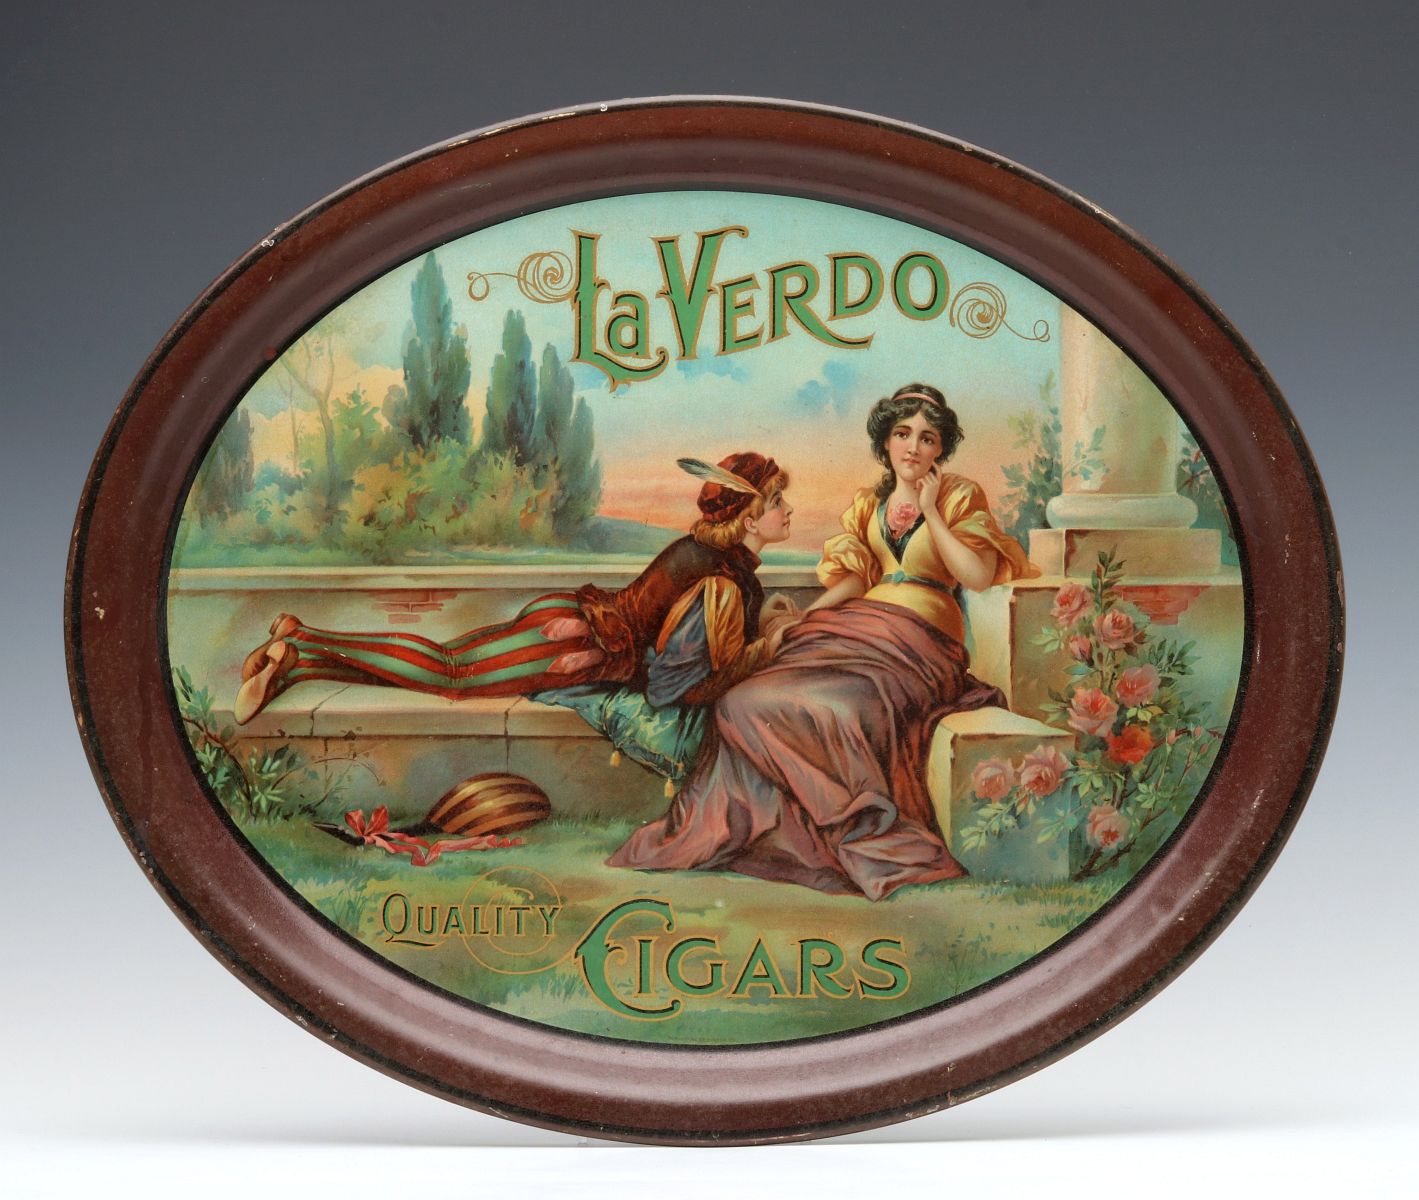 A 1900s LA VERDO CIGARS TIN LITHO ADVERTISING TRAY